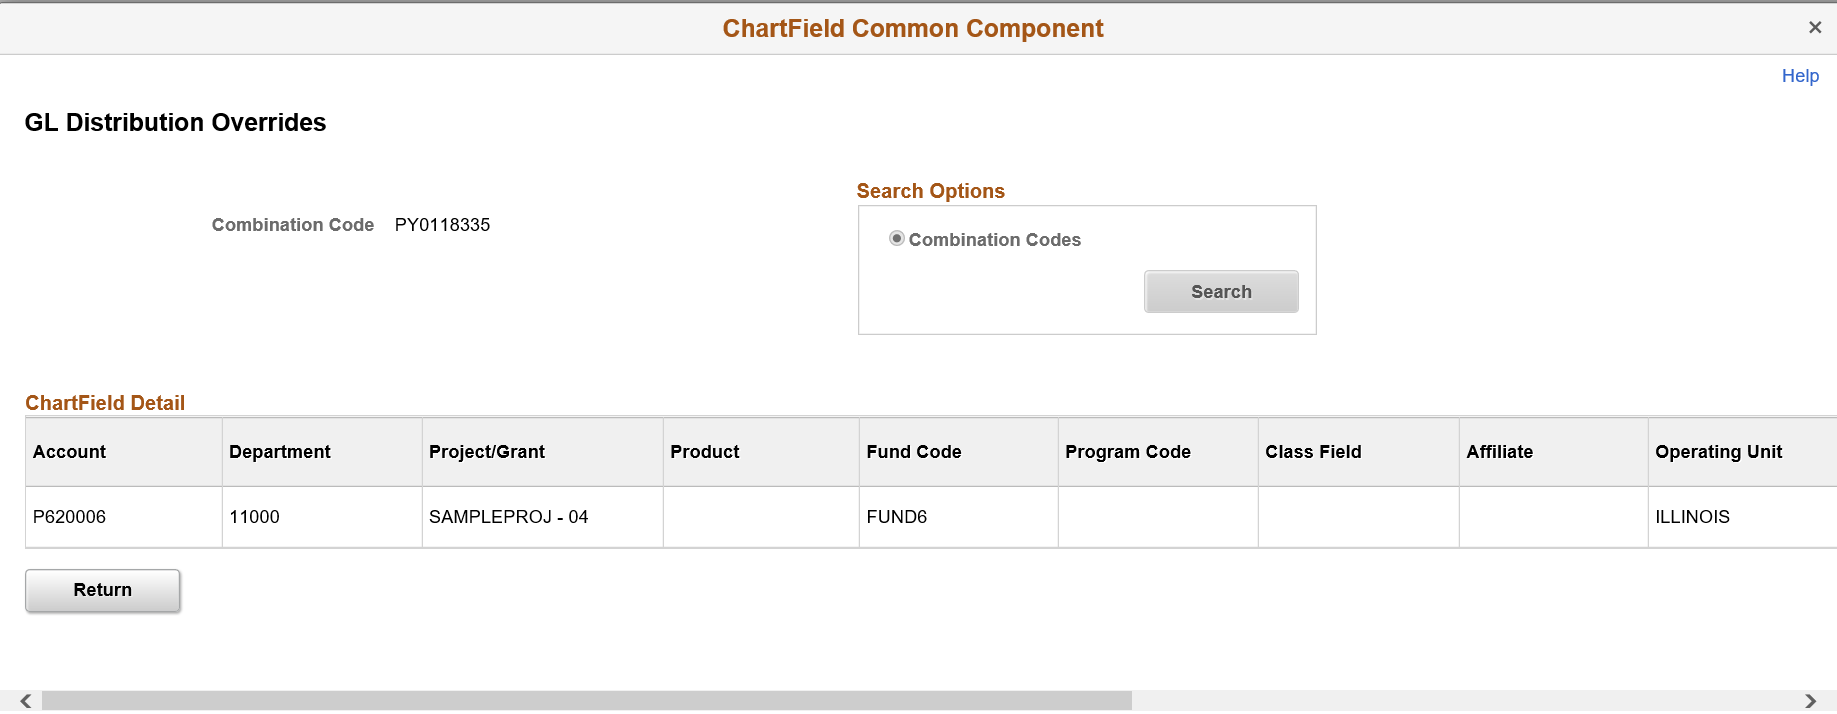 ChartField Common Component modal window